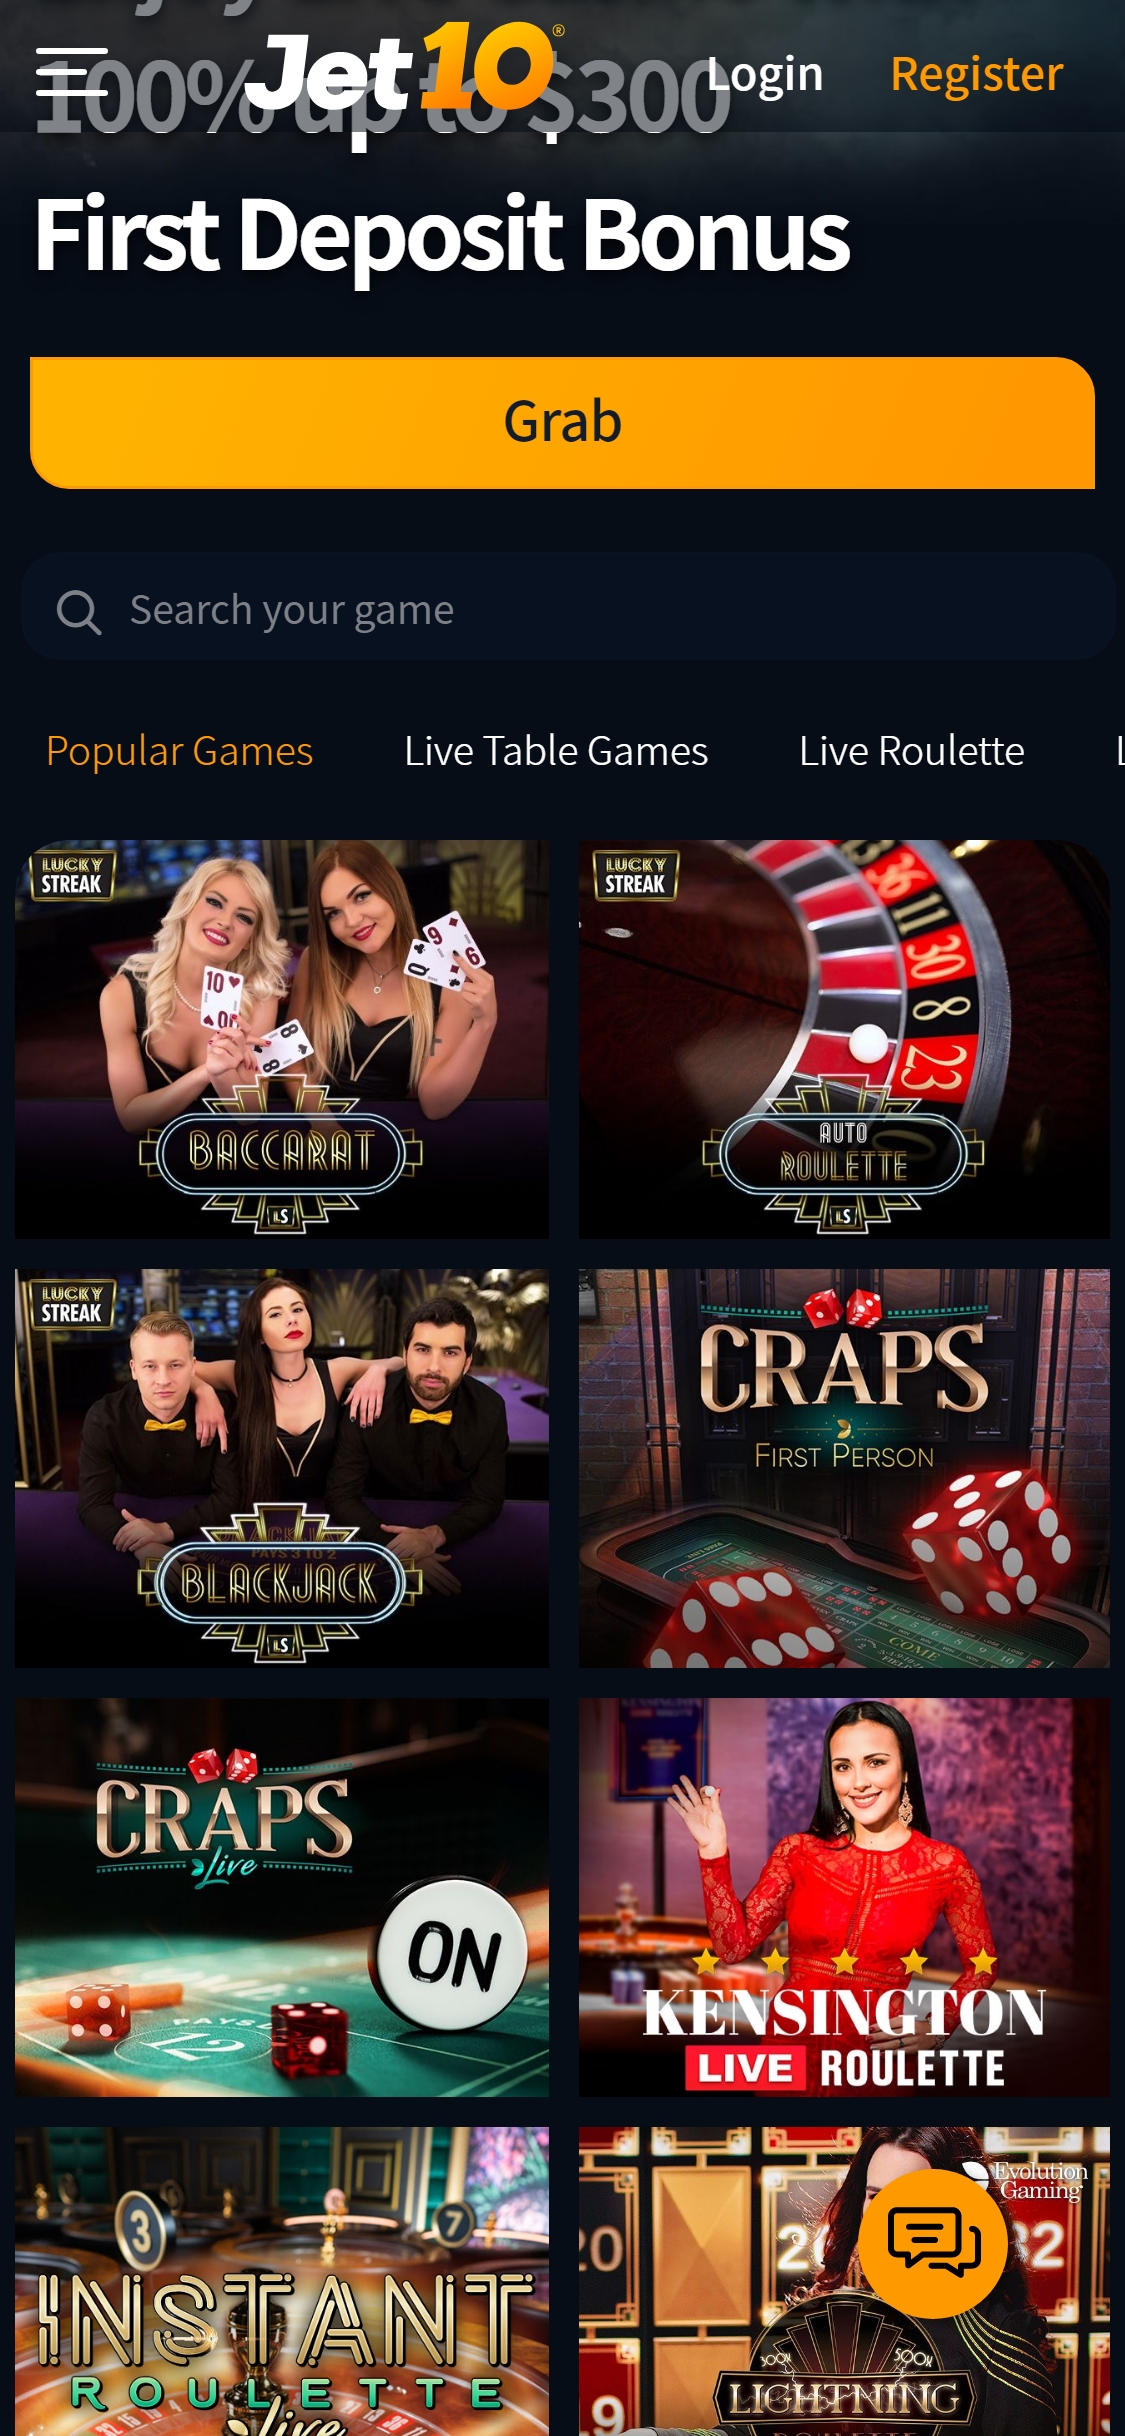 Jet10 Casino Mobile Live Dealer Games Review